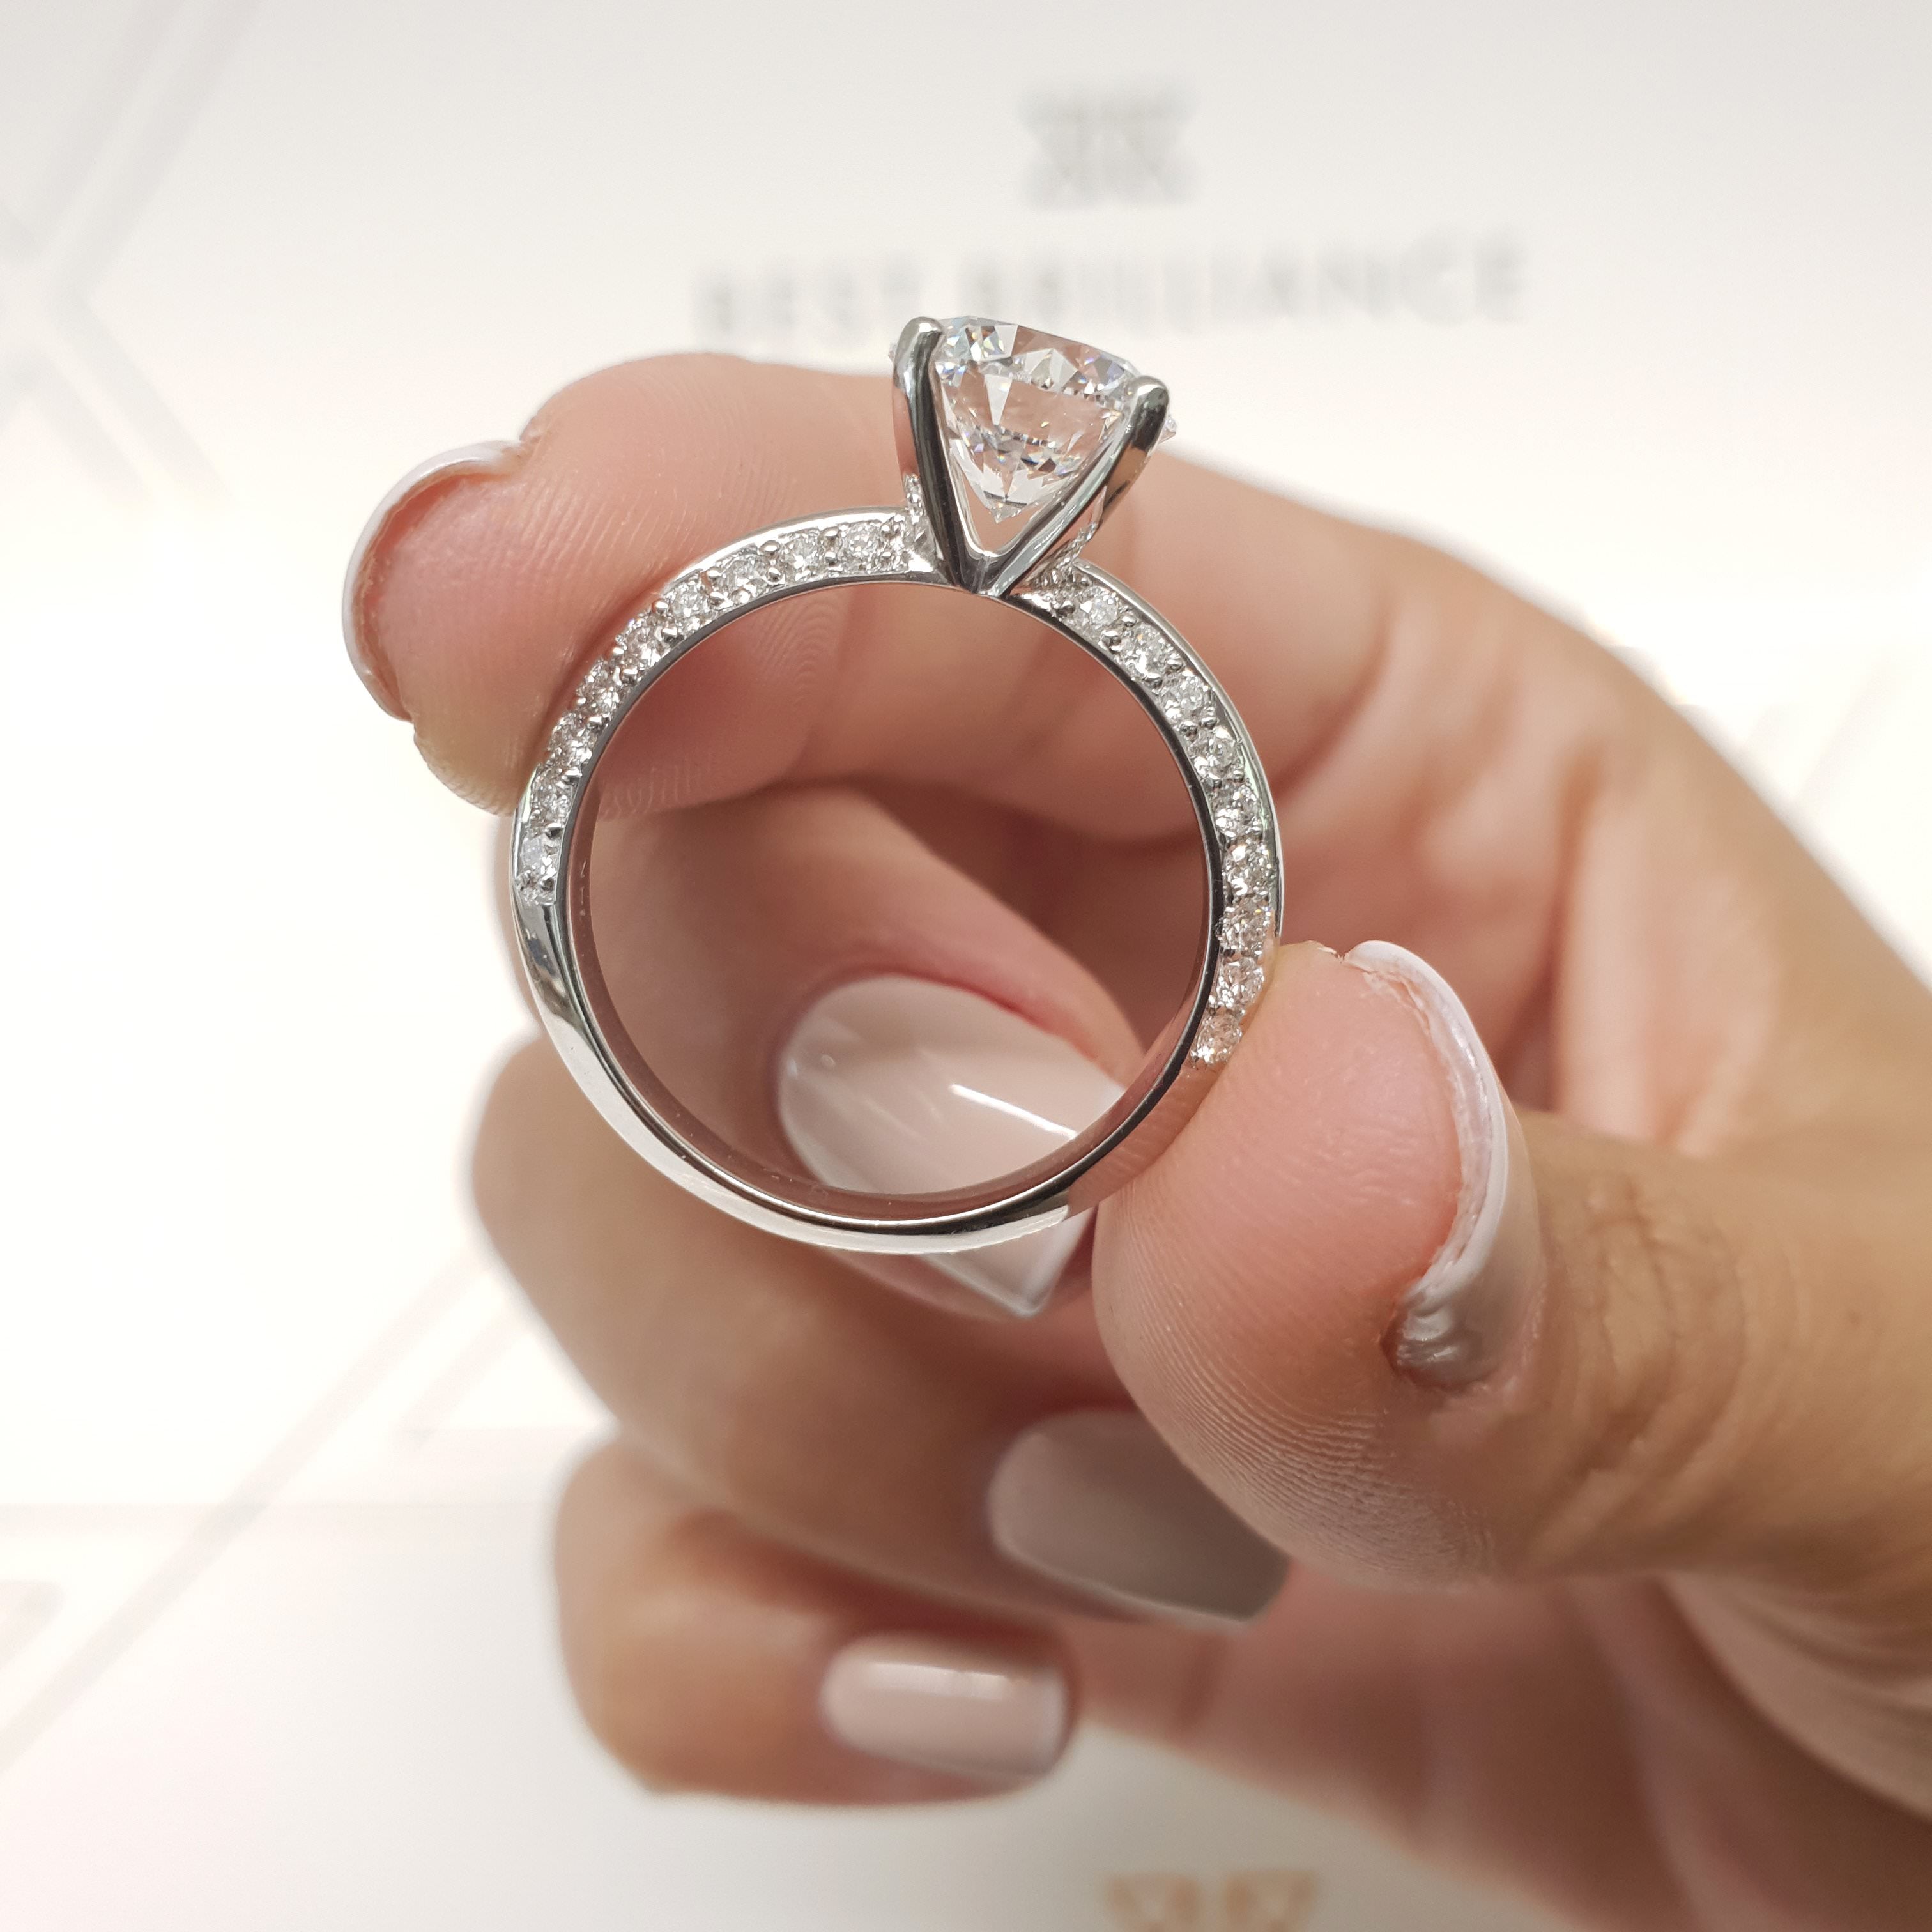 Ariana Diamond Engagement Ring   (2.3 Carat) -18K White Gold